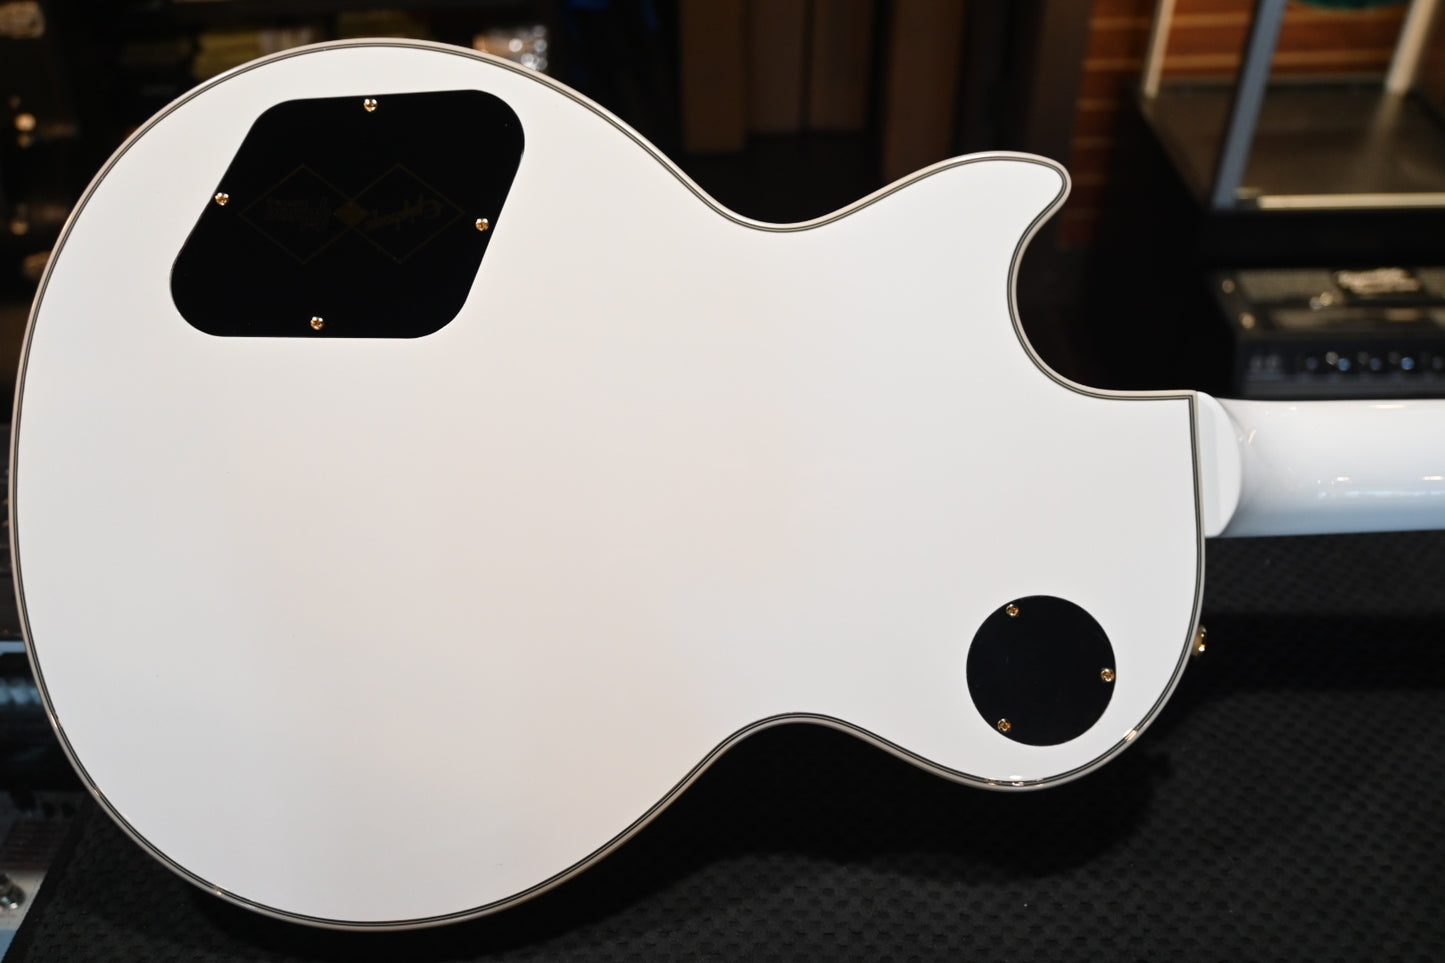 Epiphone Les Paul Custom - Alpine White Guitar #3242 - Danville Music